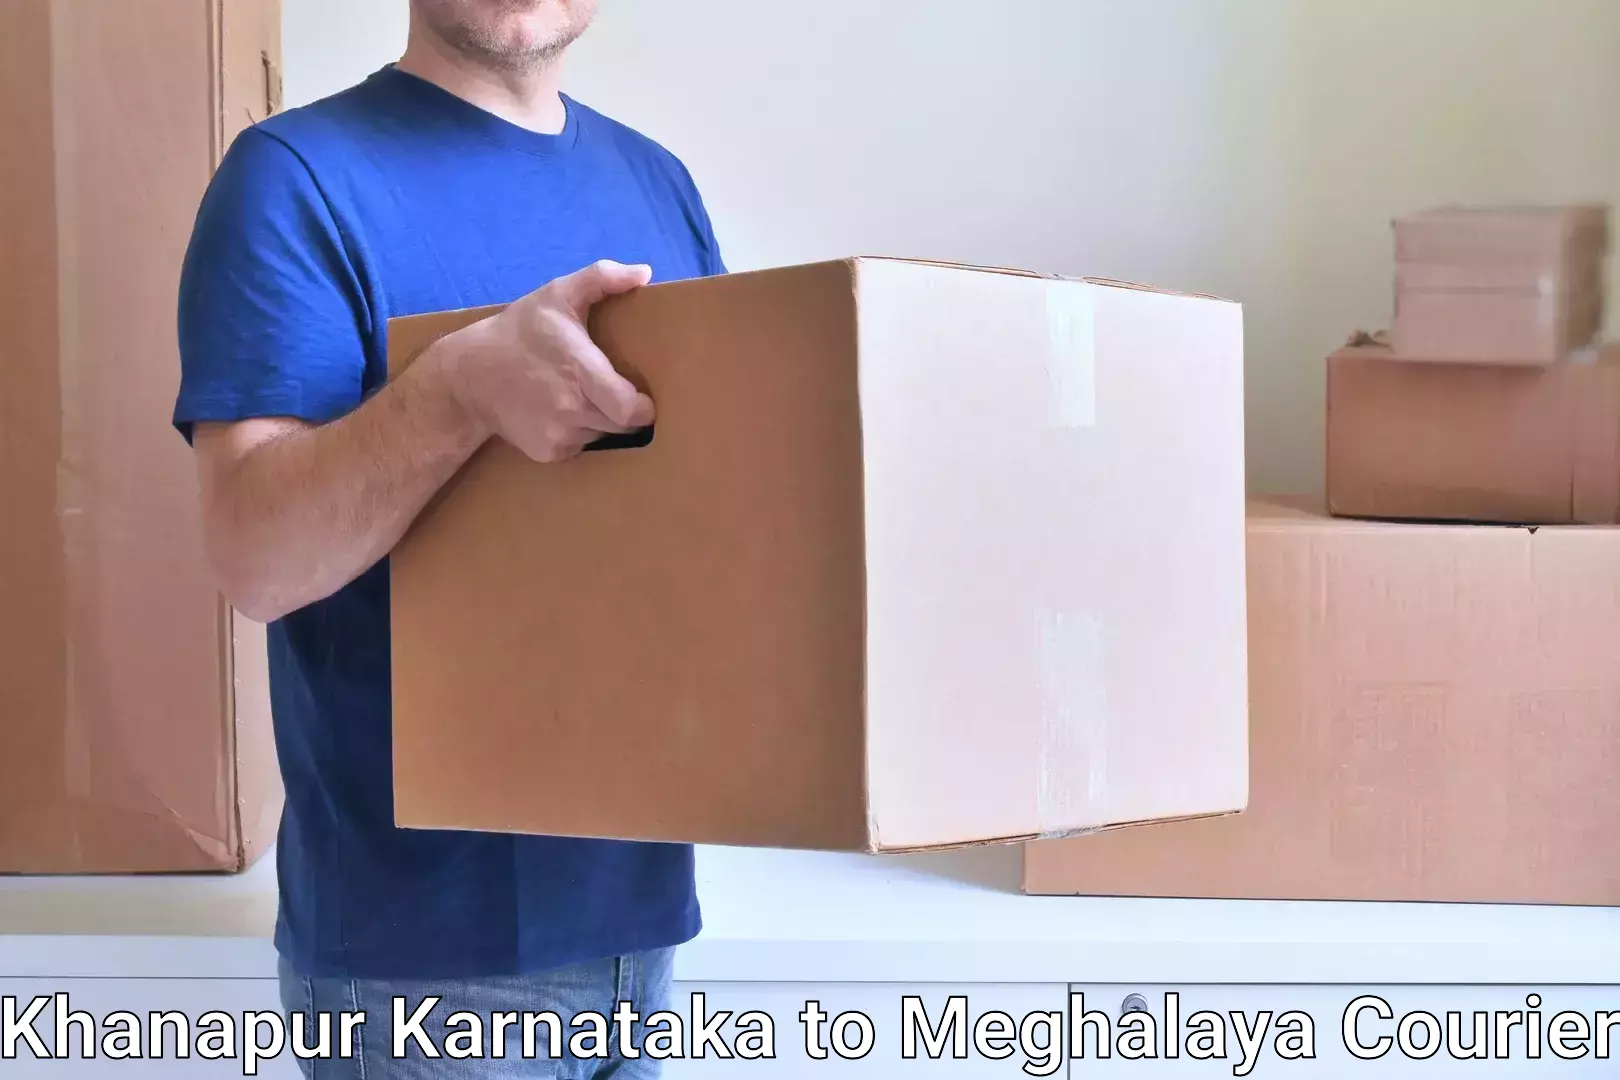 24/7 courier service Khanapur Karnataka to Williamnagar